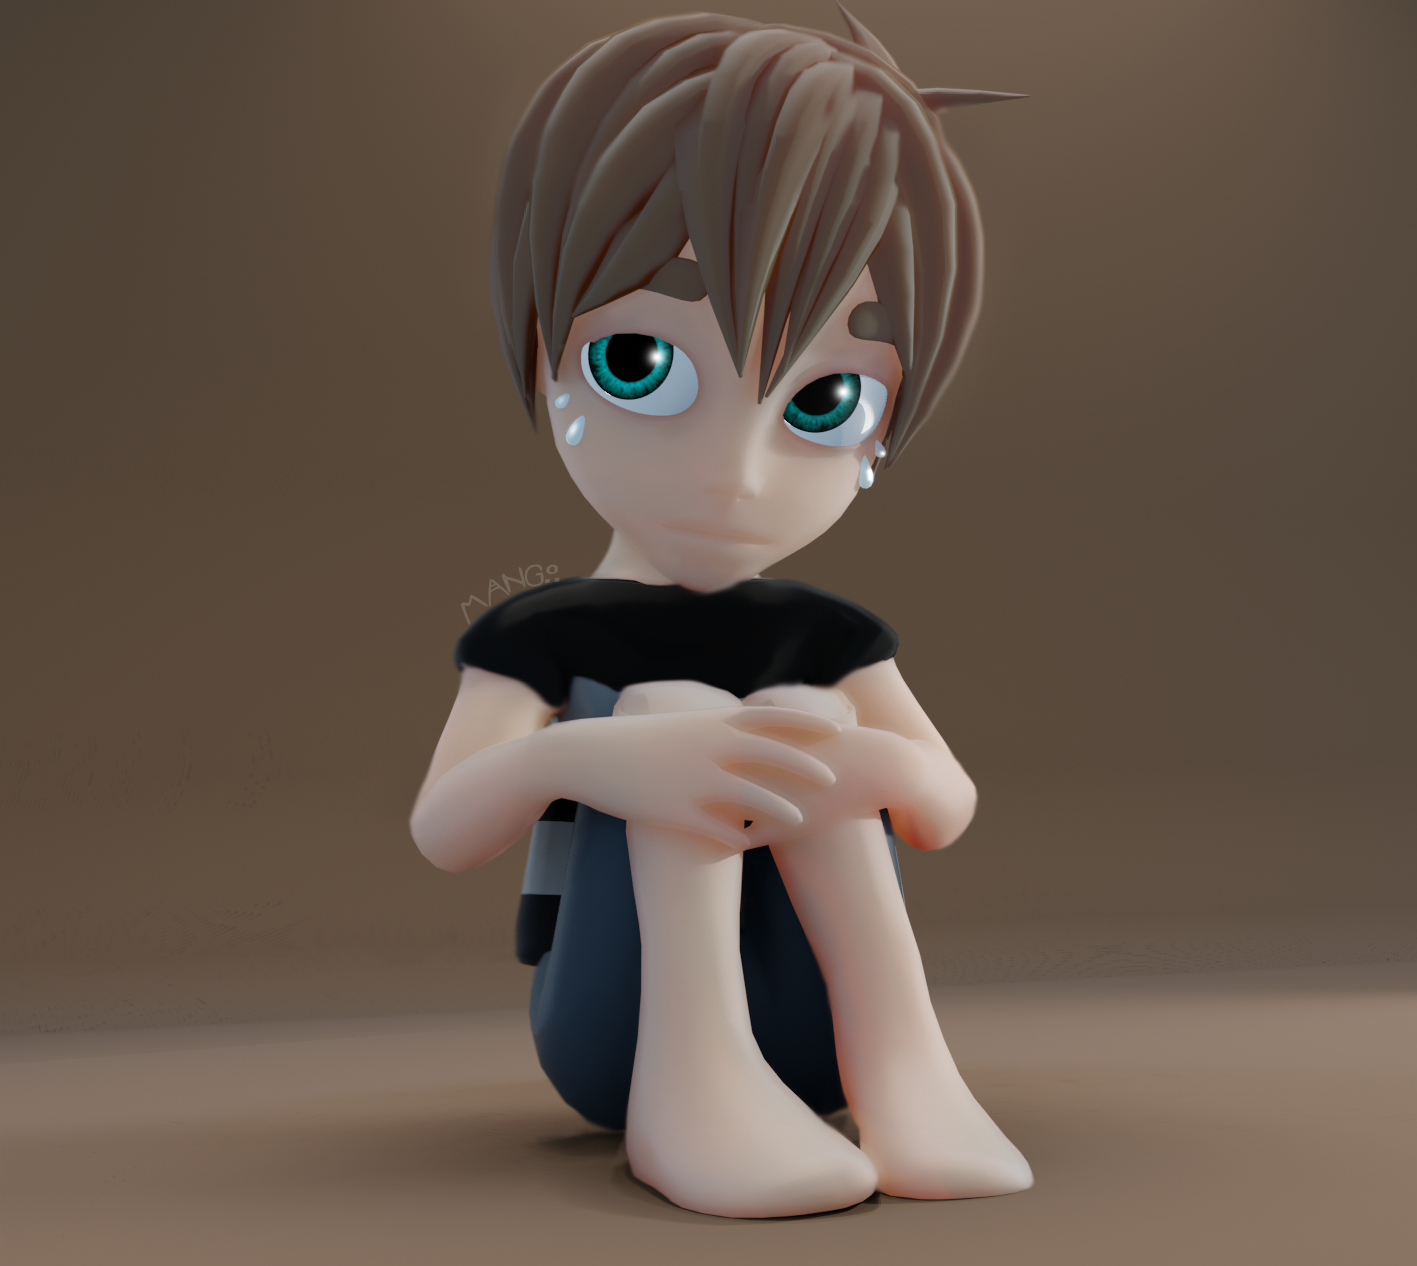 FNaF 4 - Crying Child ~: Nightmare :~ by Animegameronline on DeviantArt